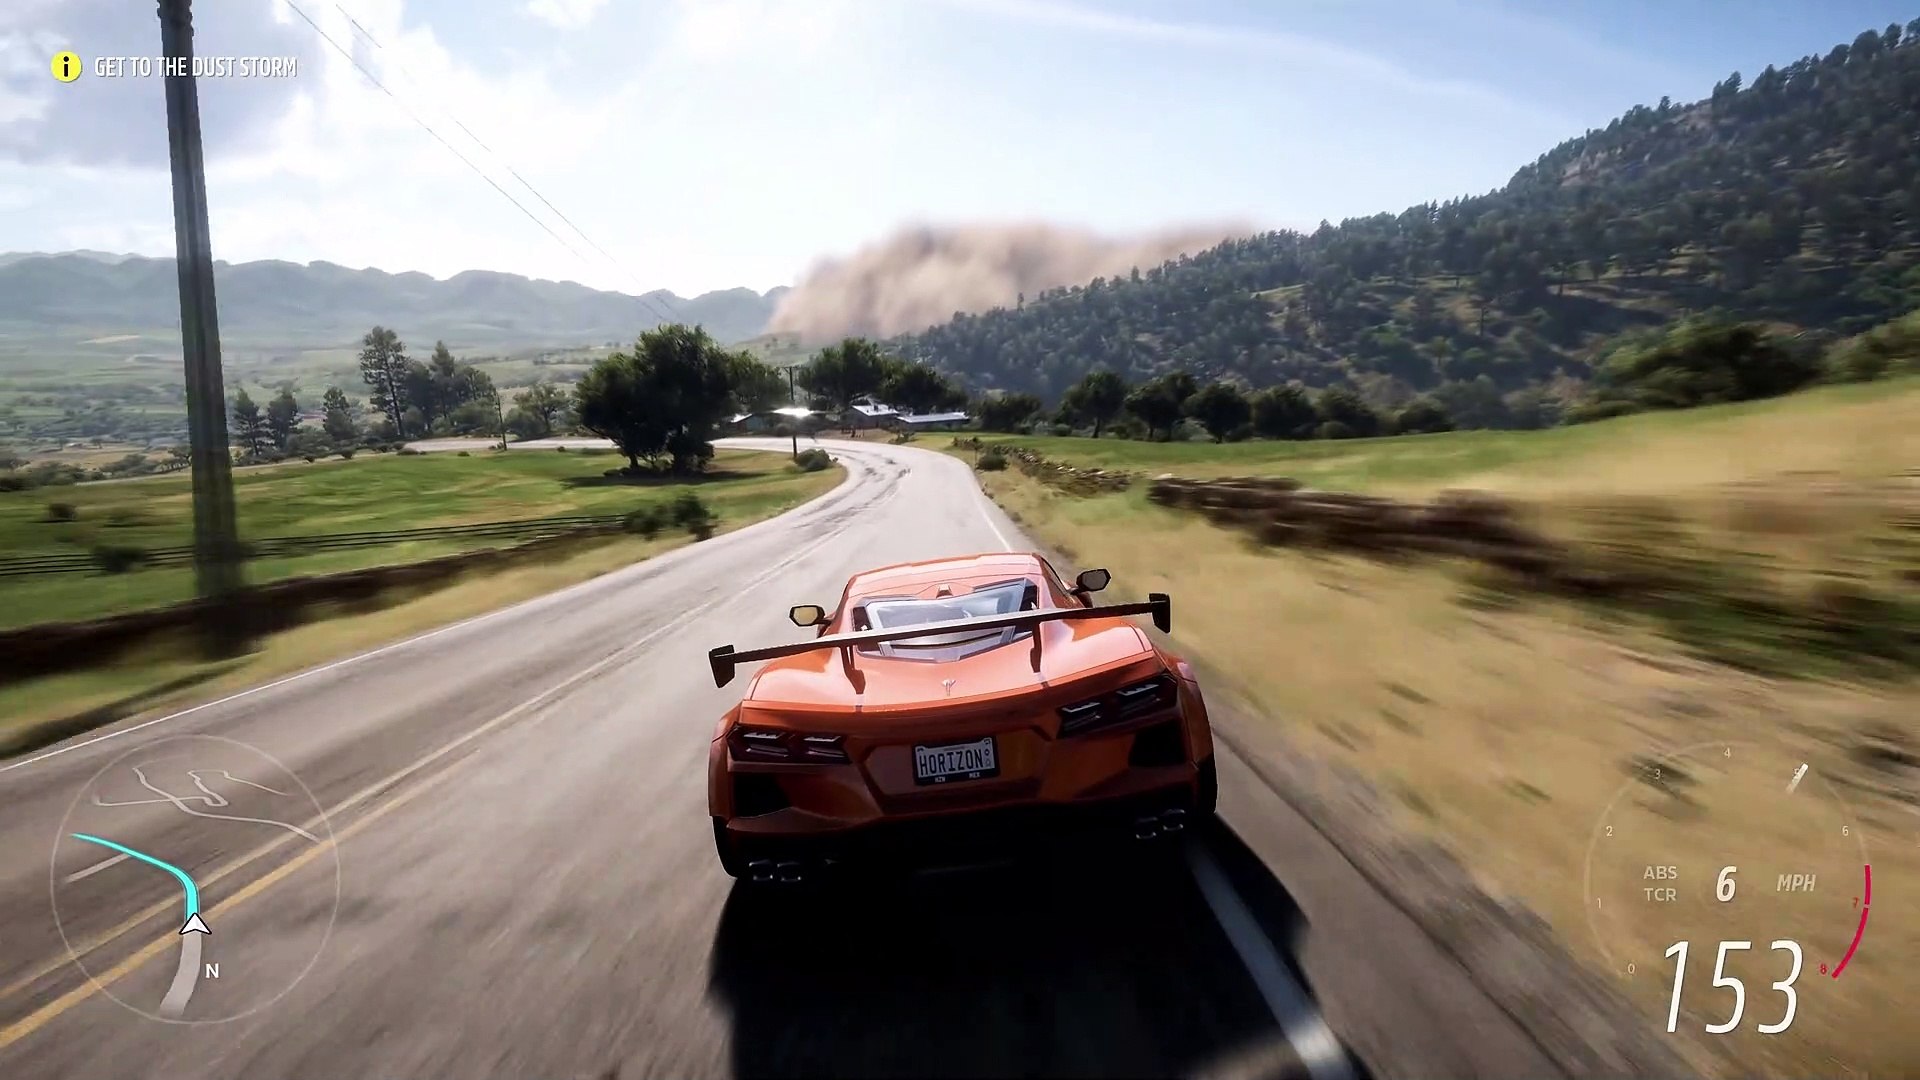 Forza Horizon 5 Official Initial Drive Trailer 